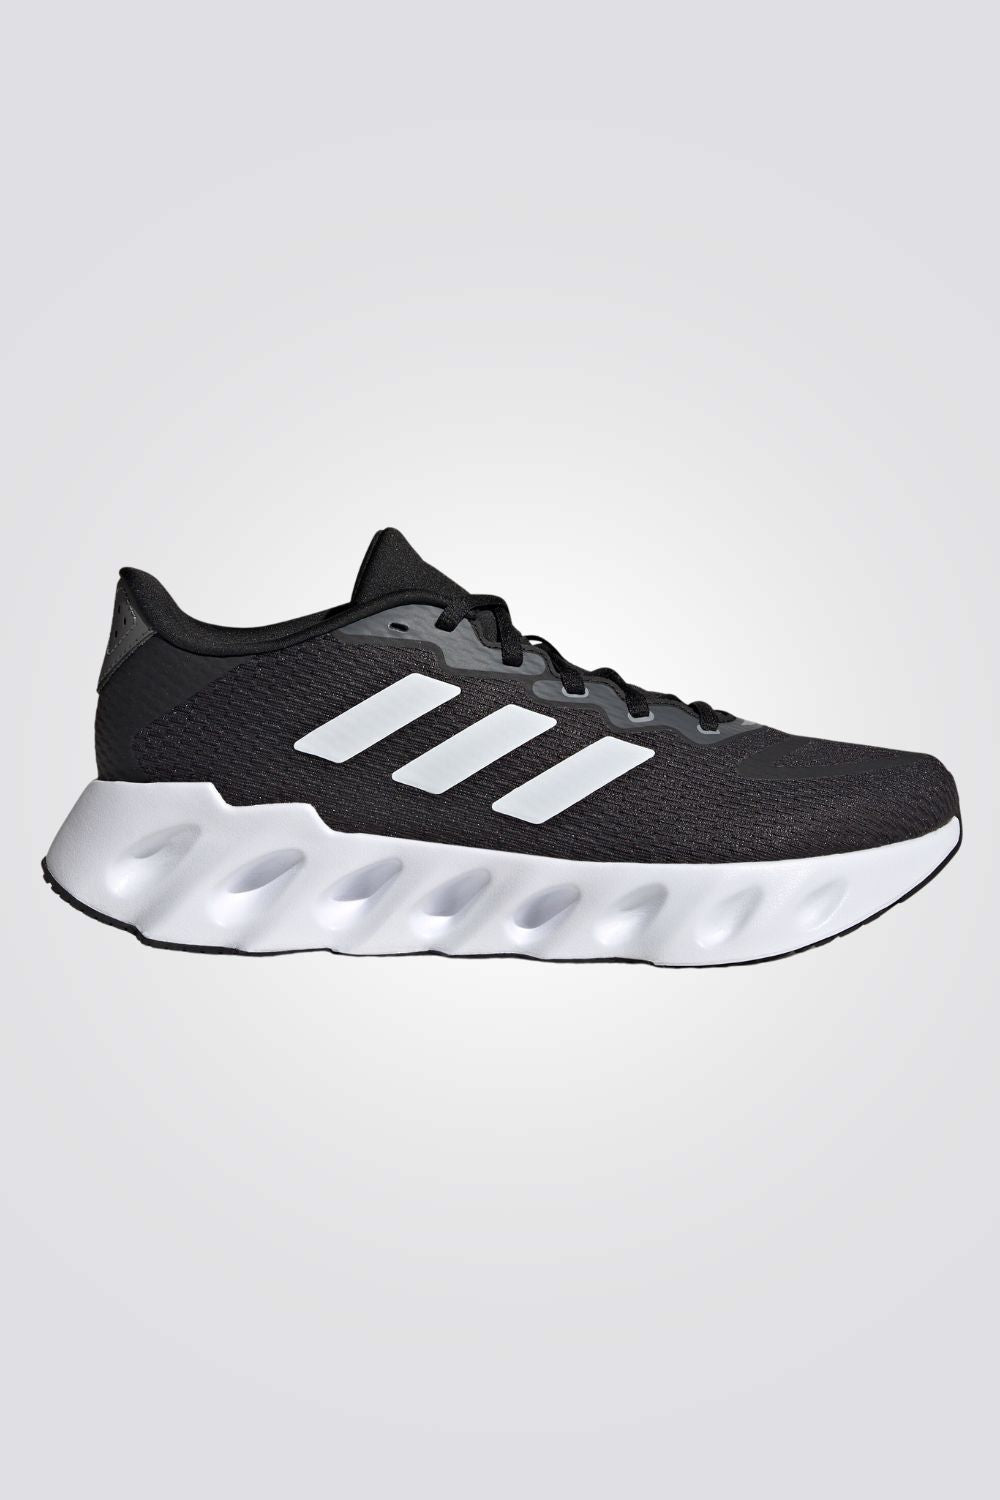 ADIDAS - נעלי ספורט לנשים SWITCH RUN בצבע שחור ולבן - MASHBIR//365